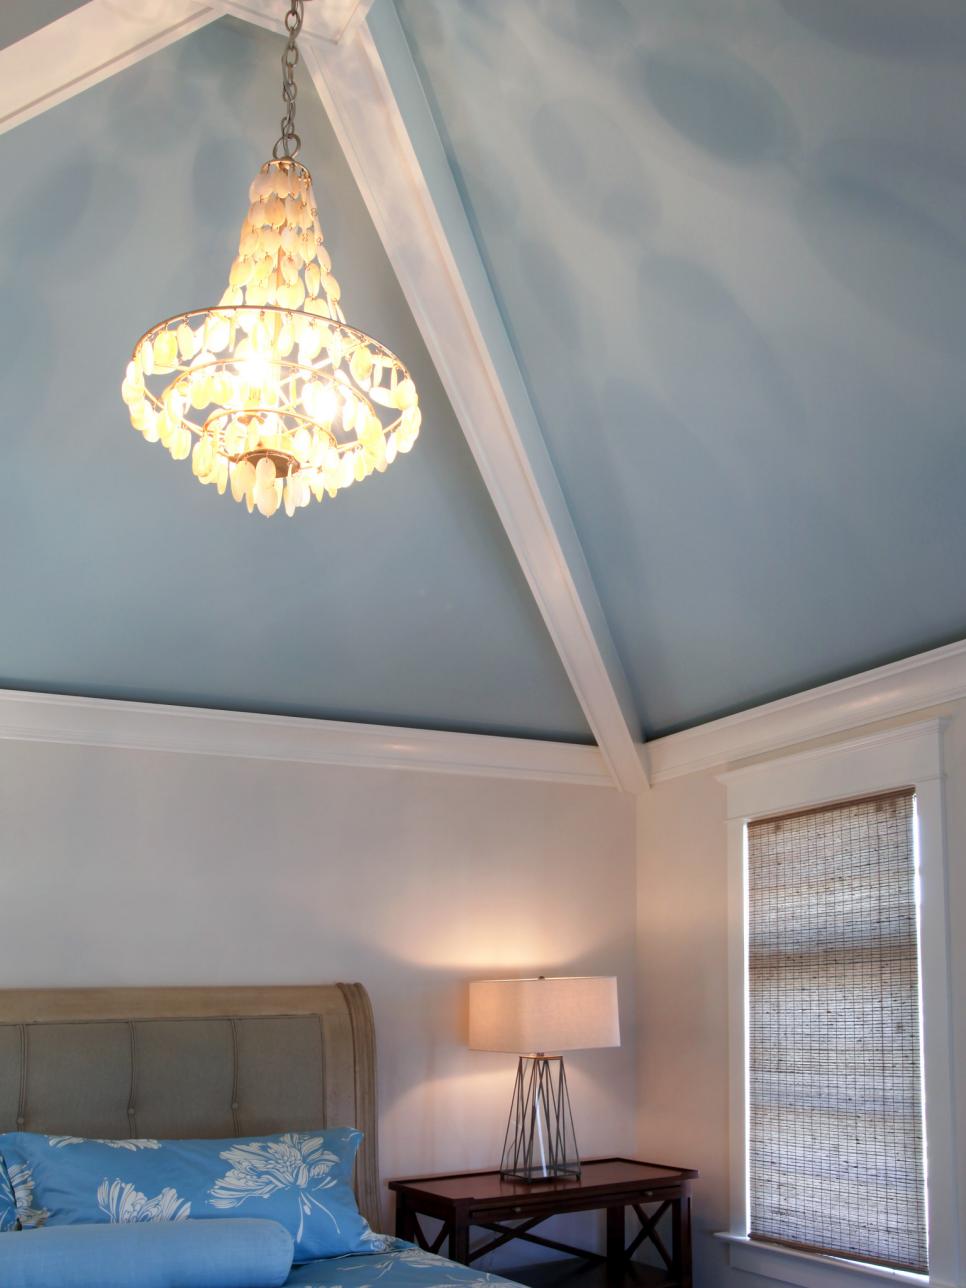 Master Bedroom Chandelier Hangs From Blue Ceiling | HGTV